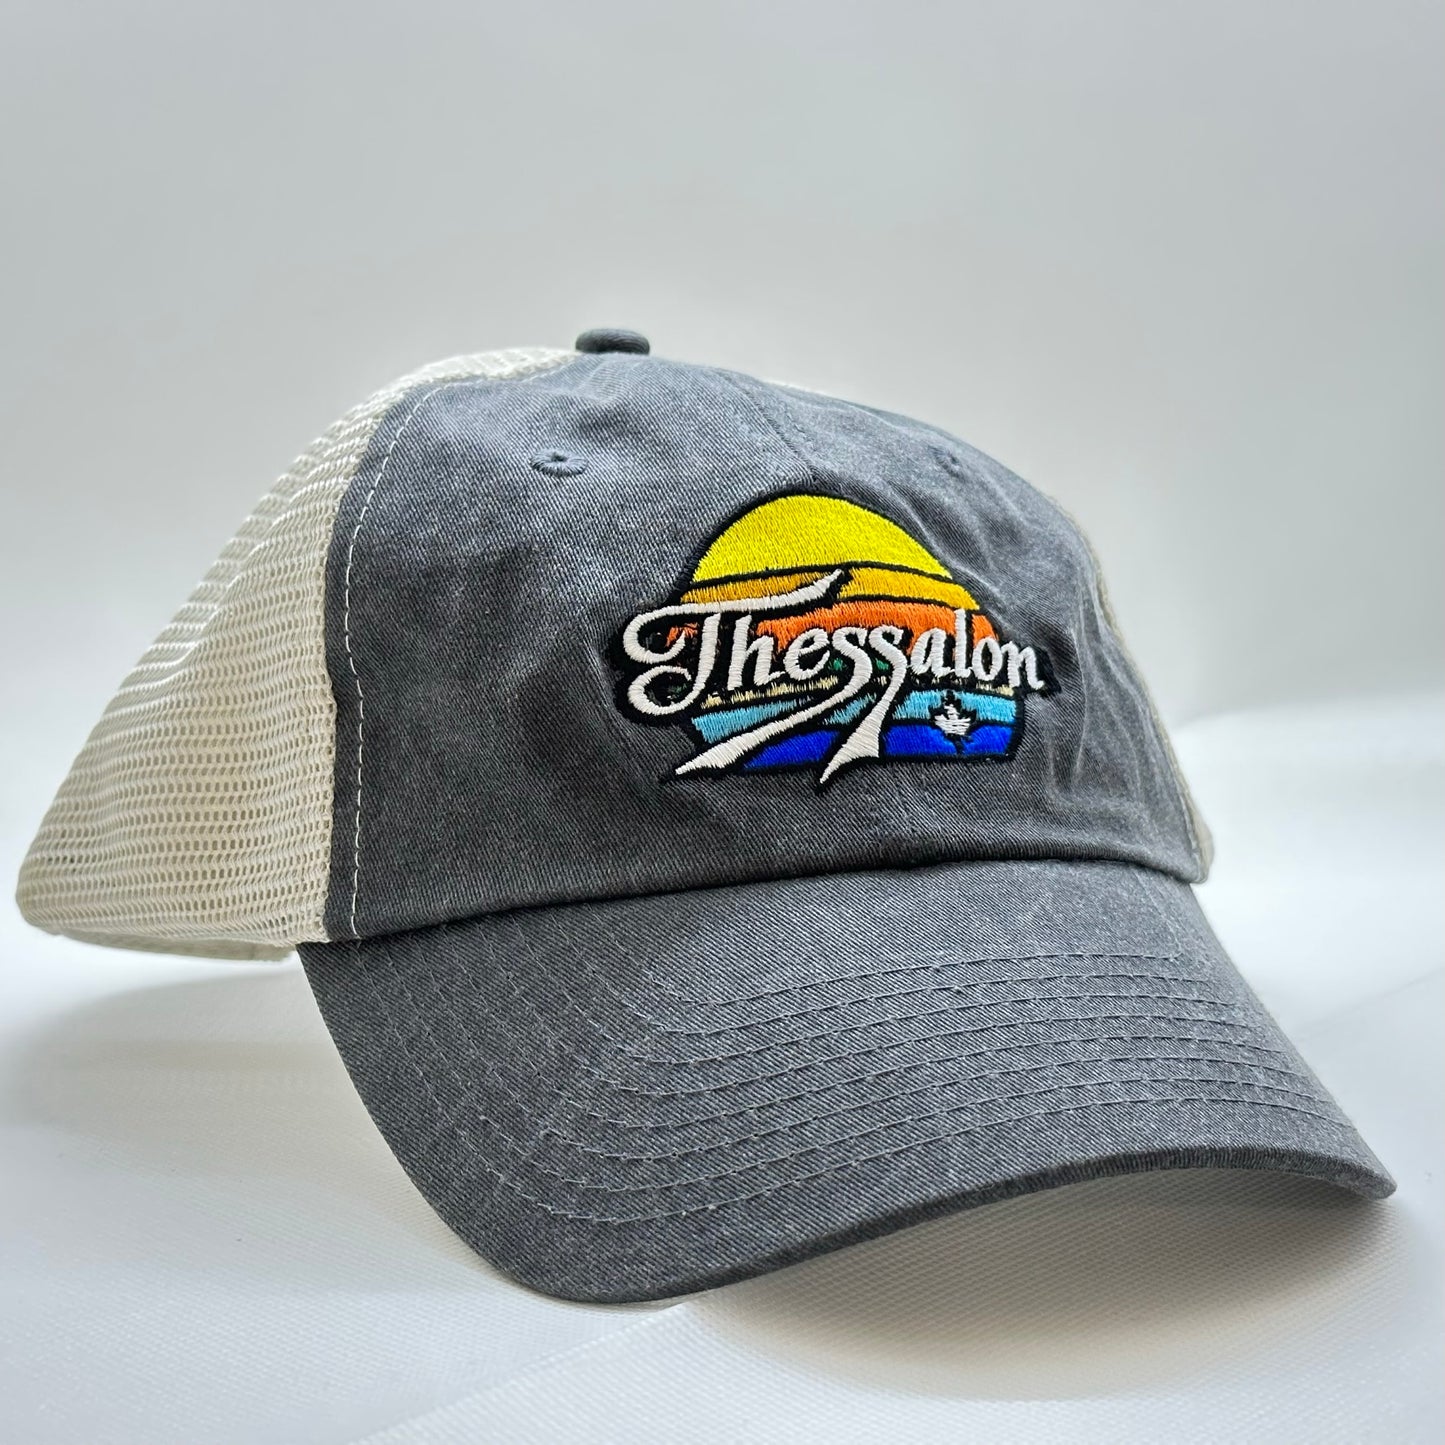 Thessalon Sunset Hat